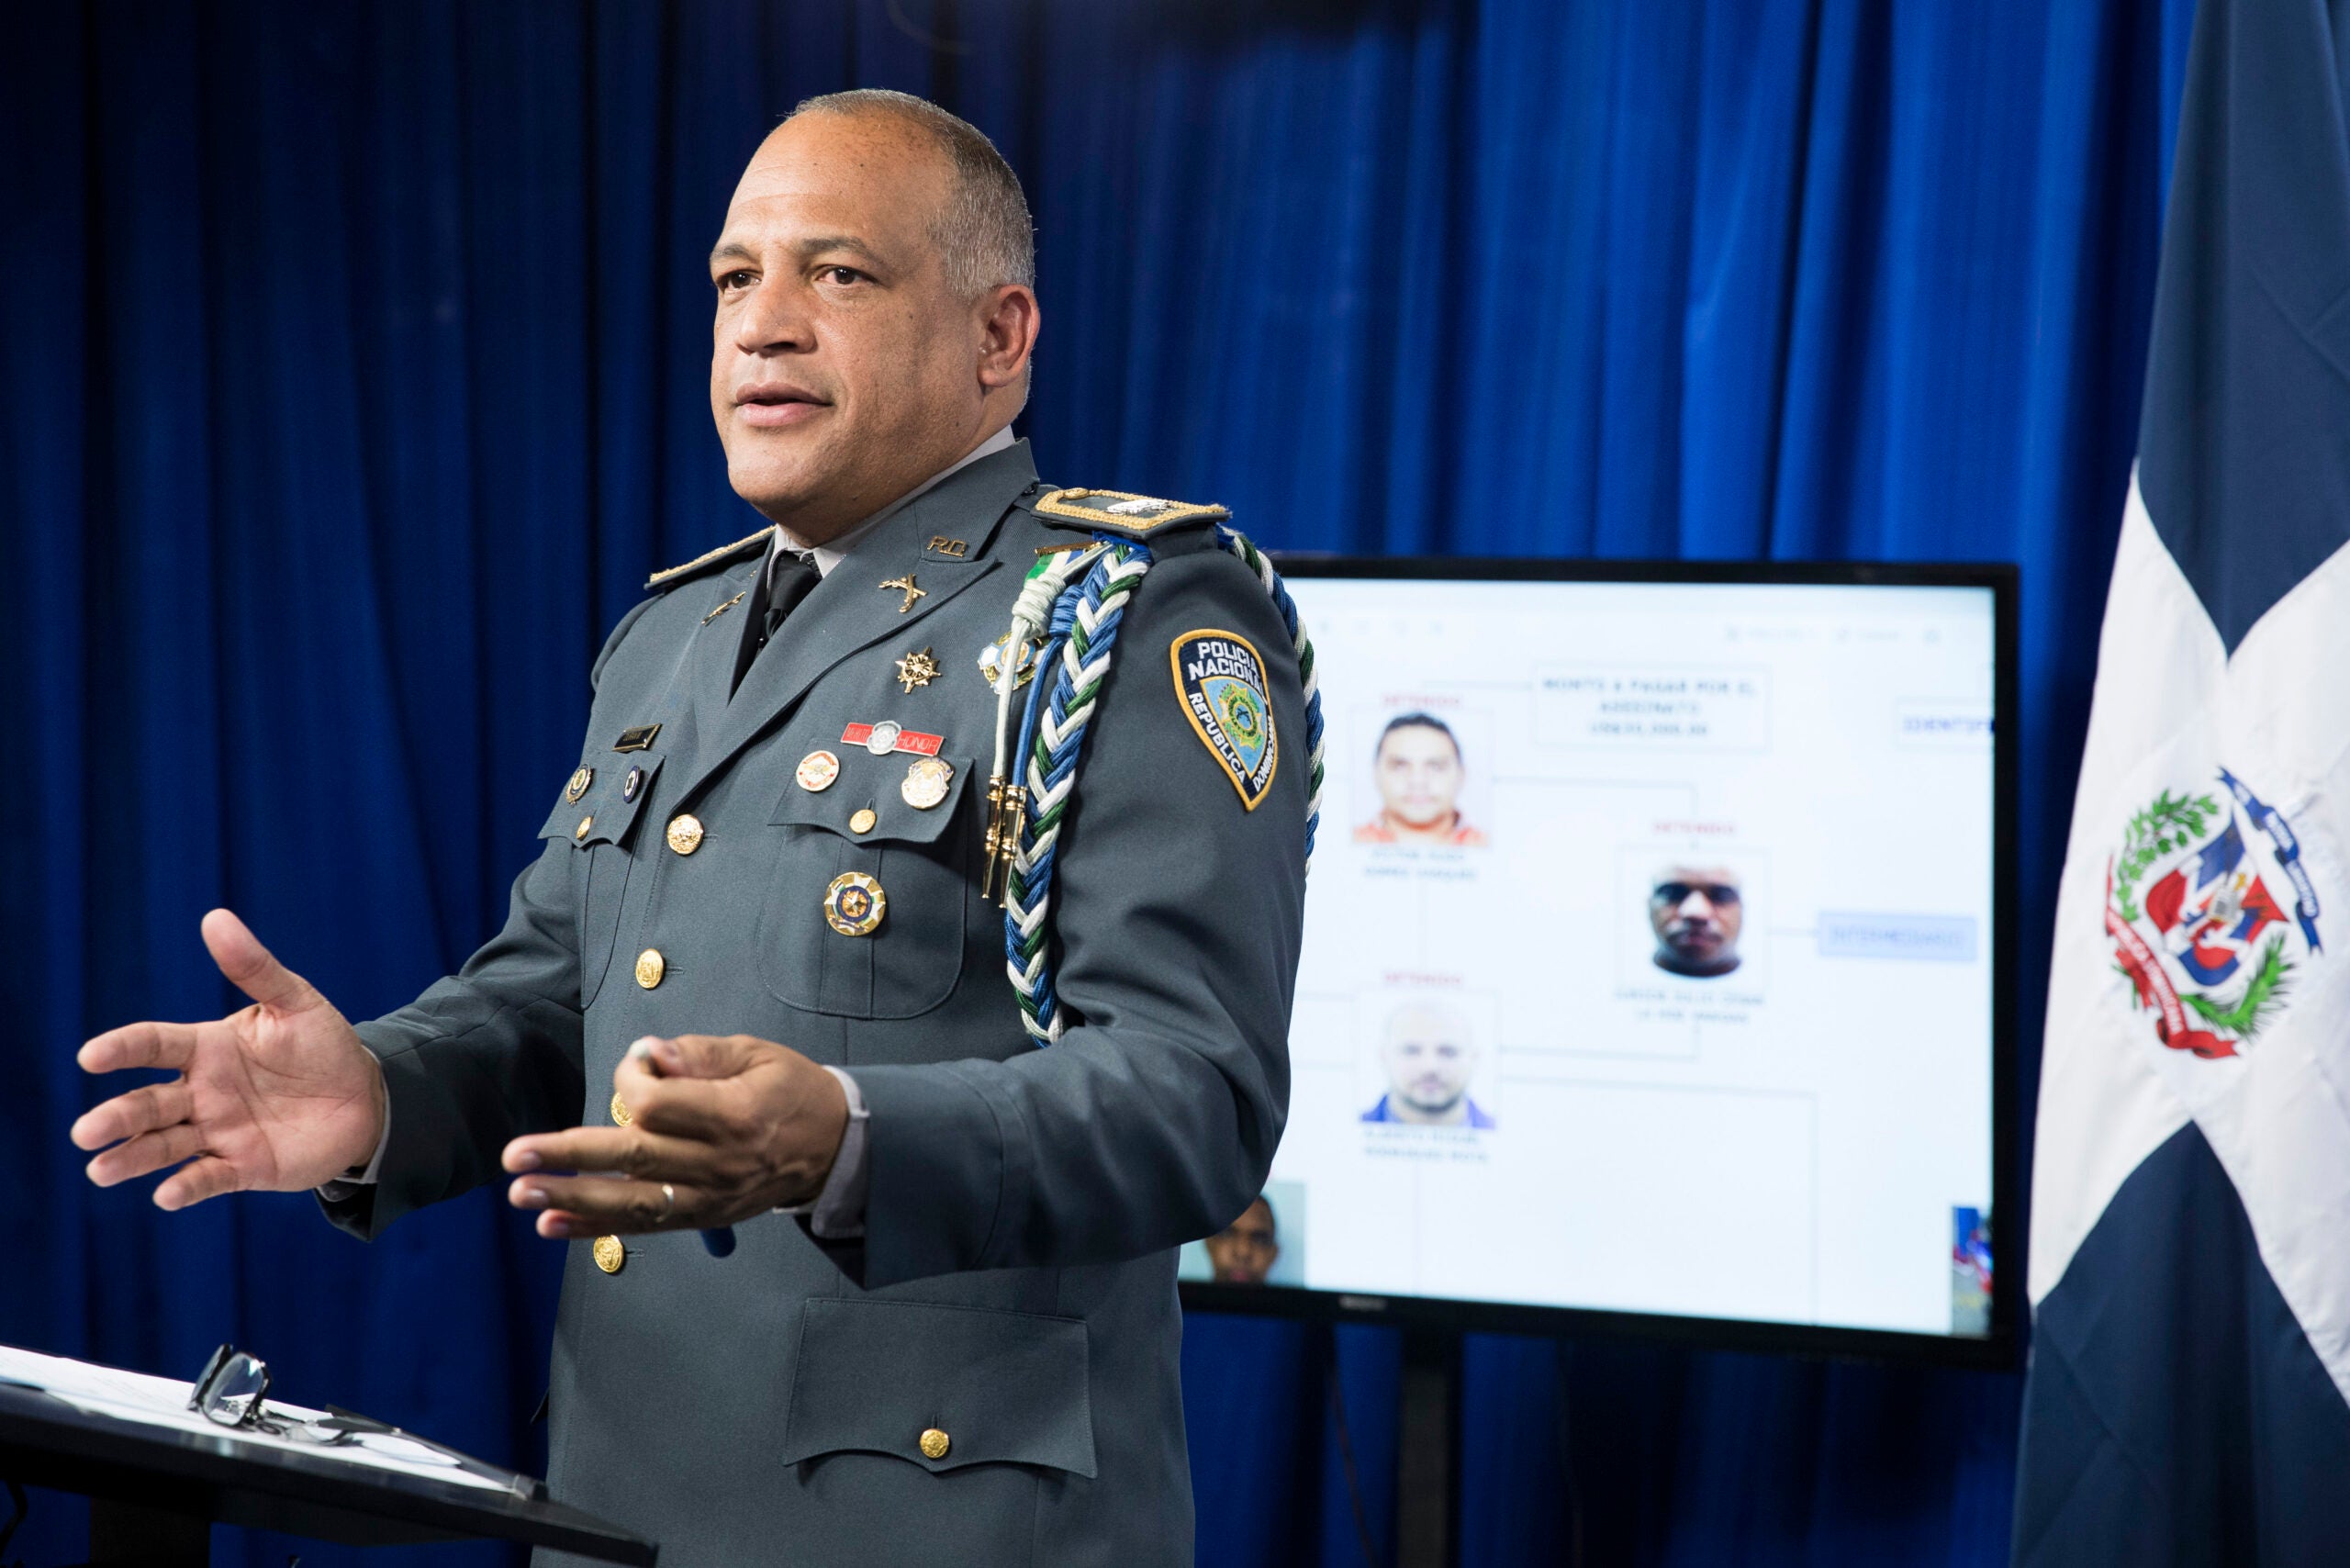 Report: Dominican drug kingpin targeted Ortiz